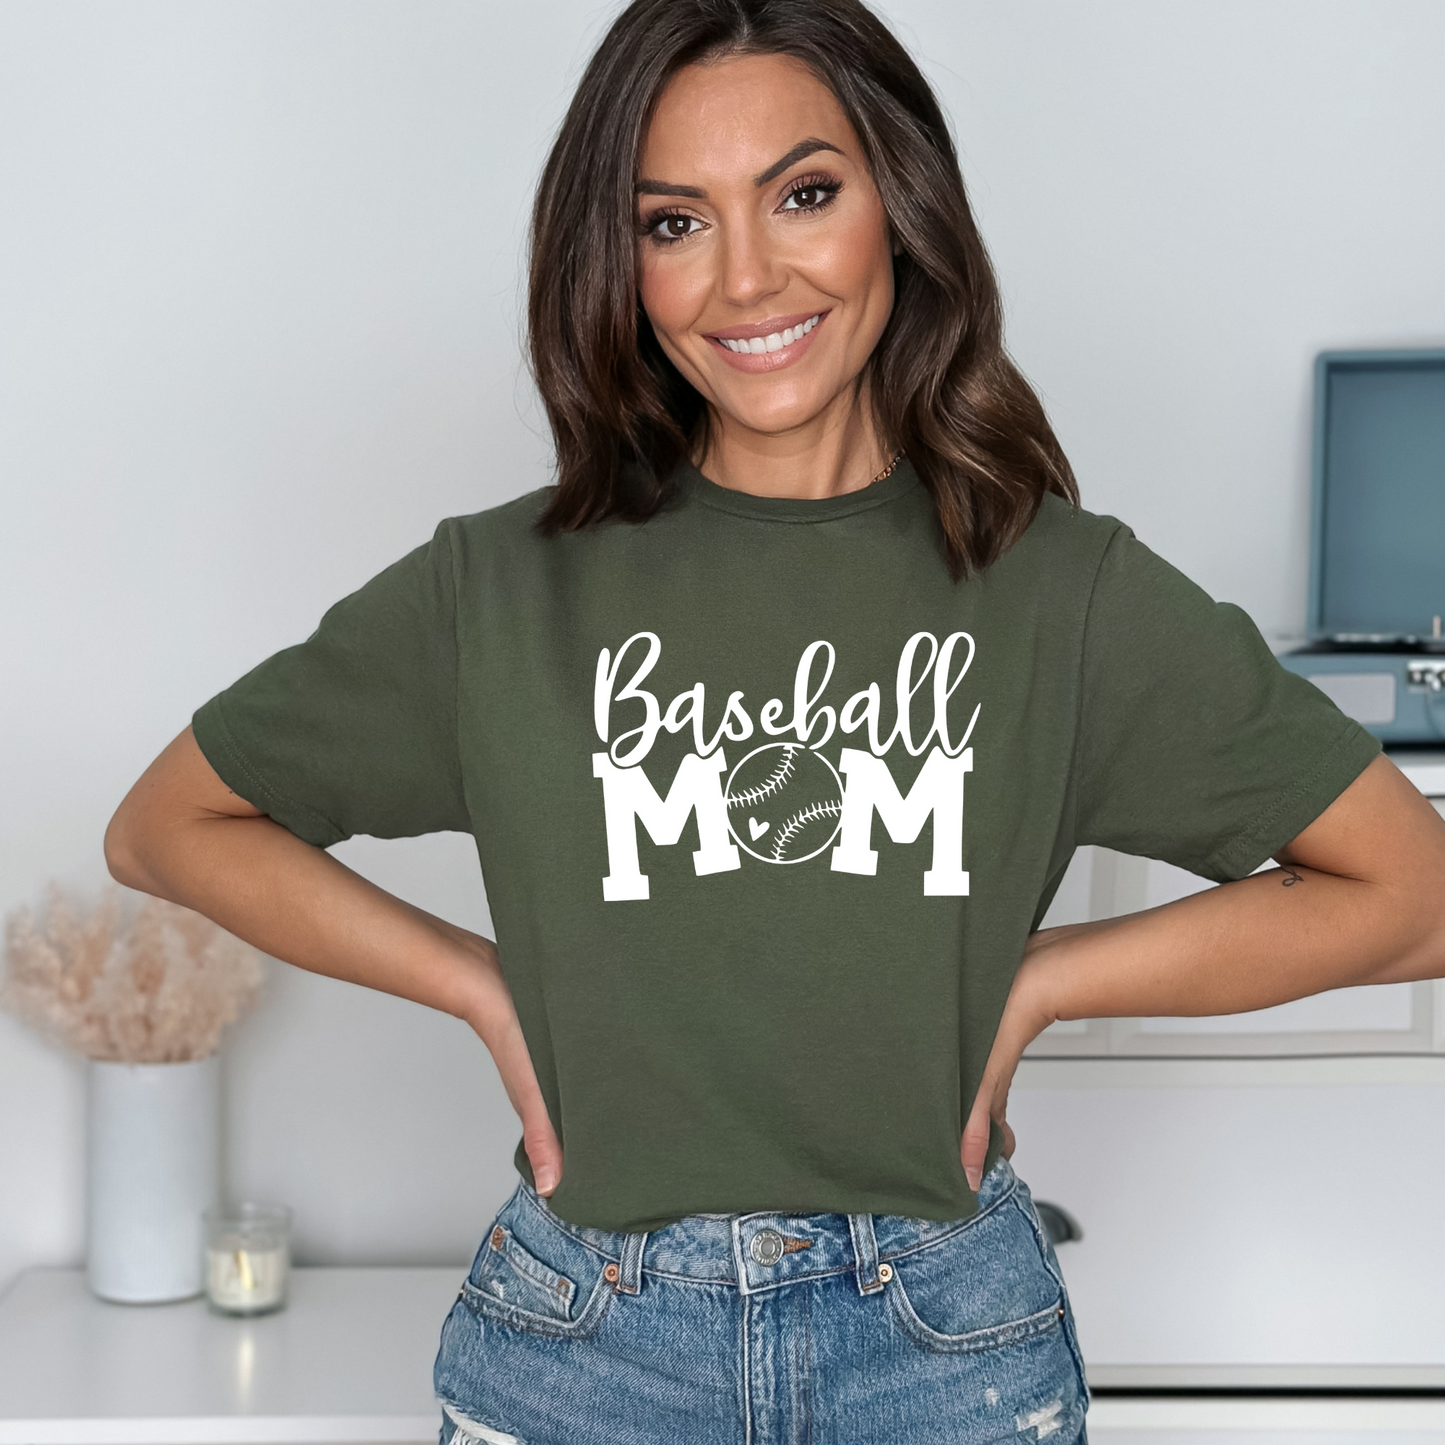 Baseball Mom - Adult Unisex Soft T-shirt